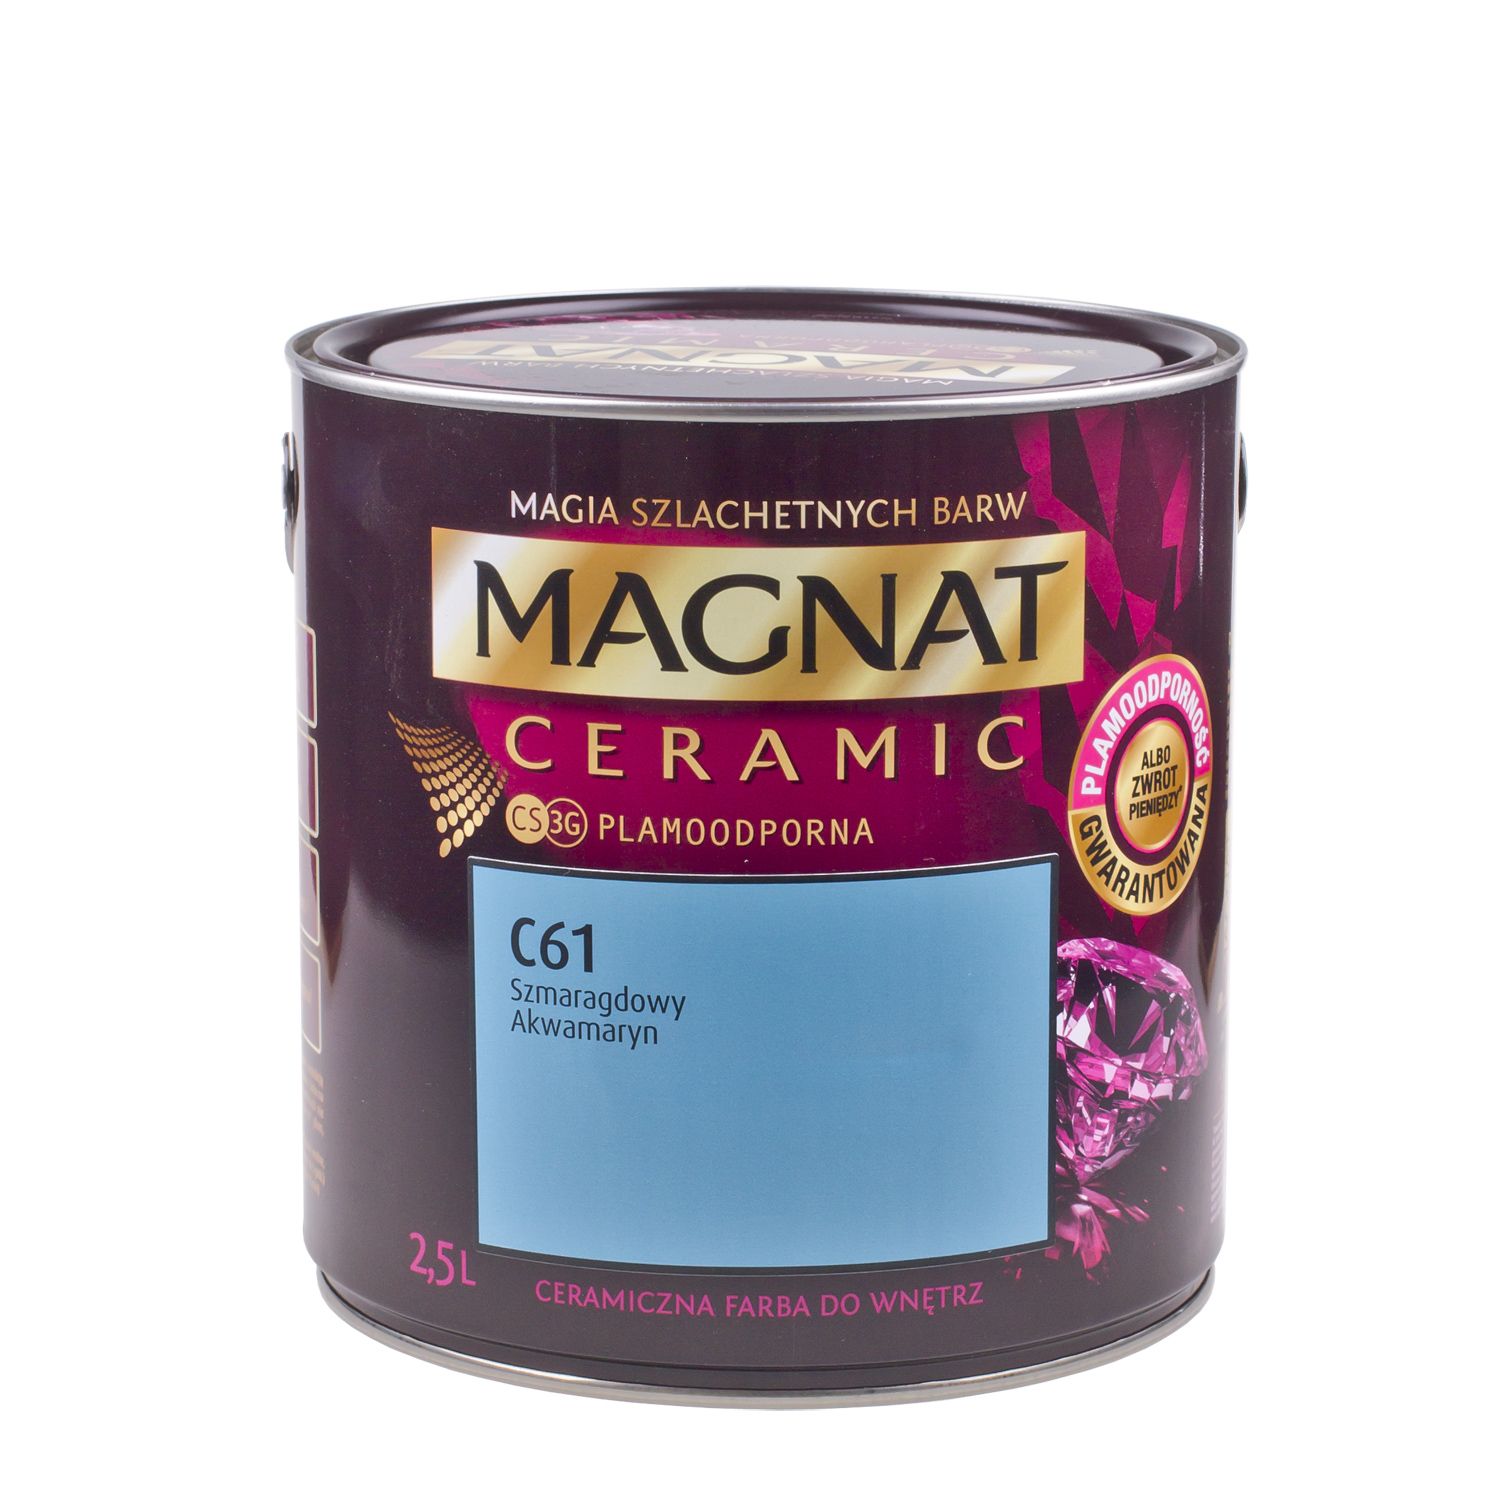 MAGNAT Ceramic (2,5L) - matná omyvatelná barva do interiéru s keramickými plnivy